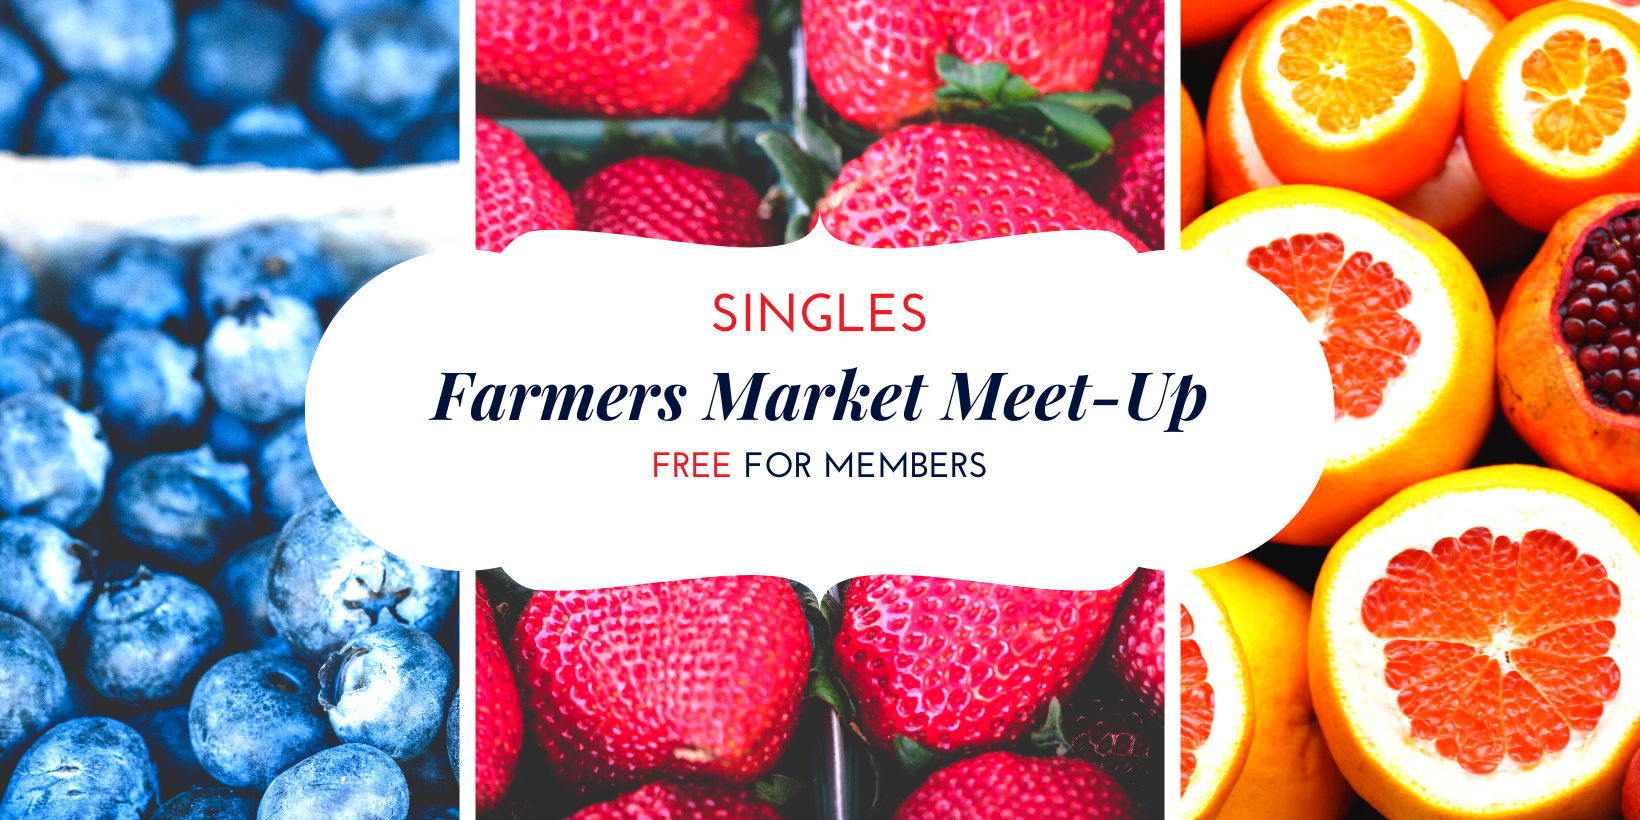 Singles Farmers Market Meet-Up - Old Market promotional image